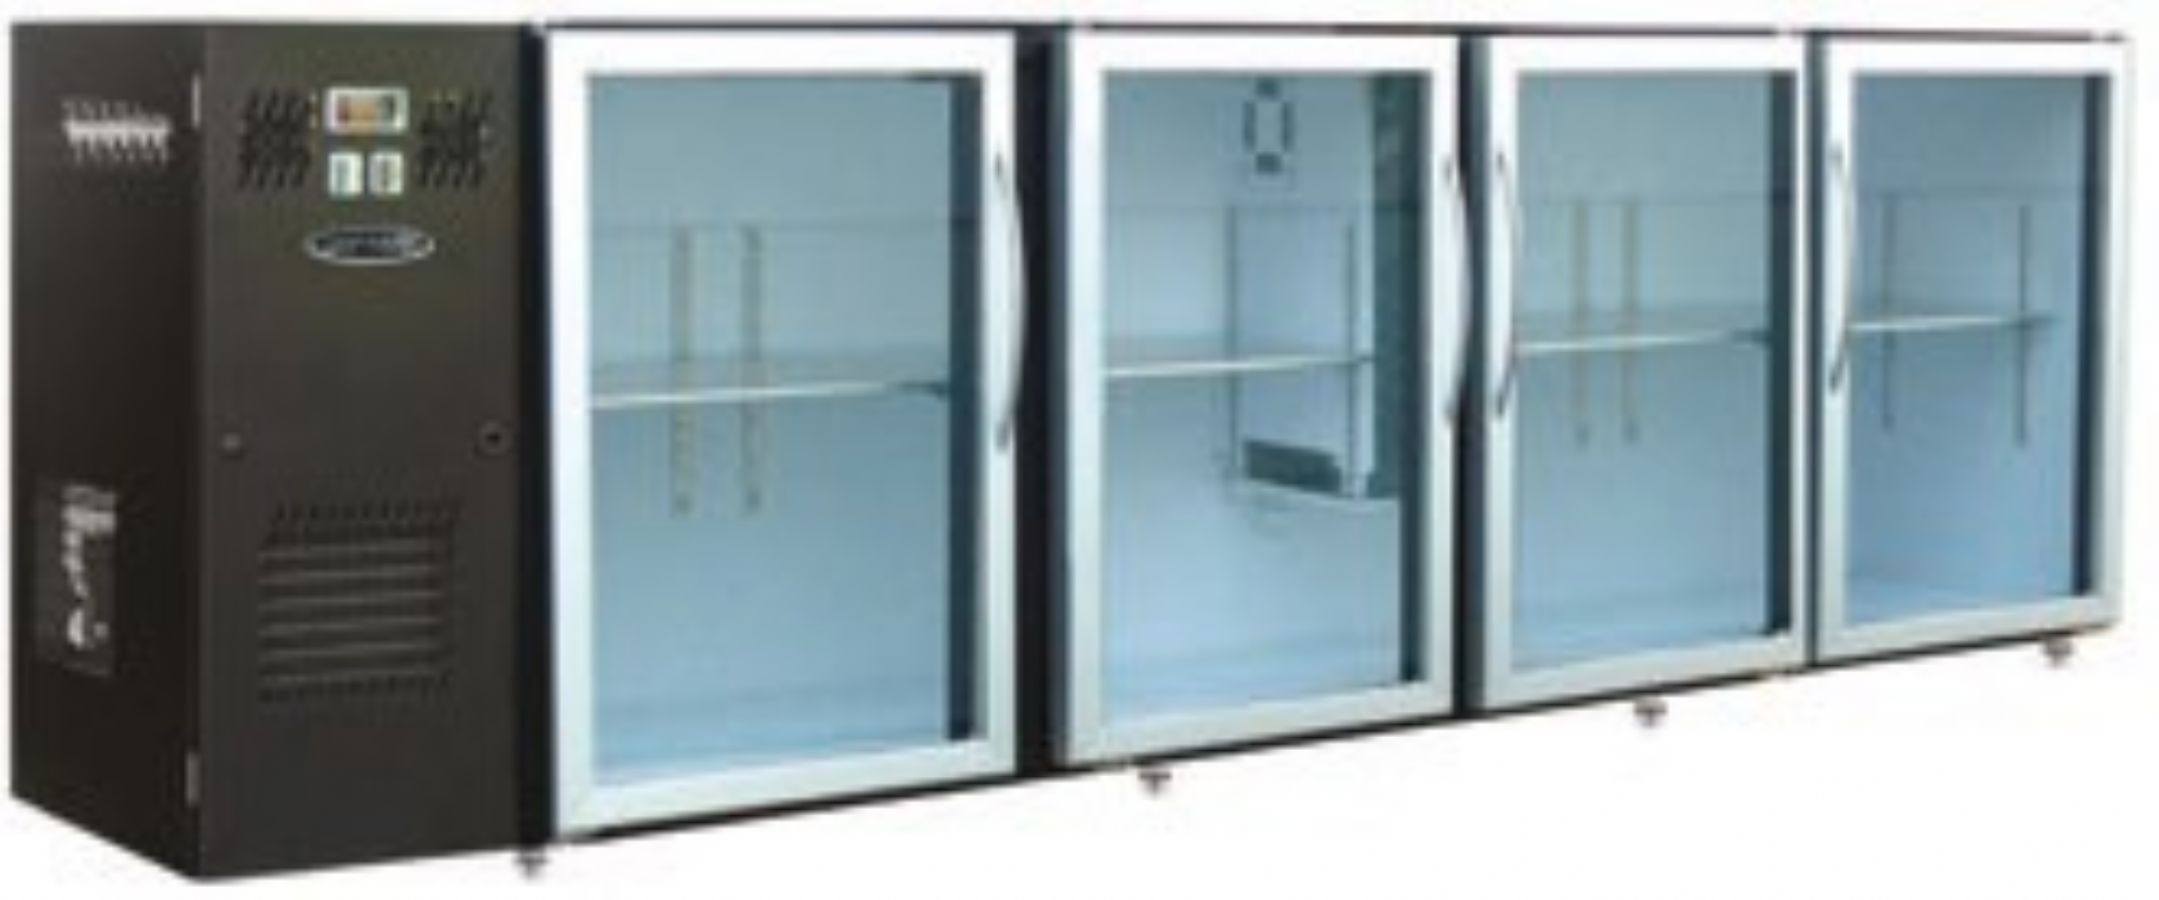 Arrire-bar Skinplate - Srie LEDS - Groupe log - 4 moyennes portes vitres - 610 litres - U54MVS